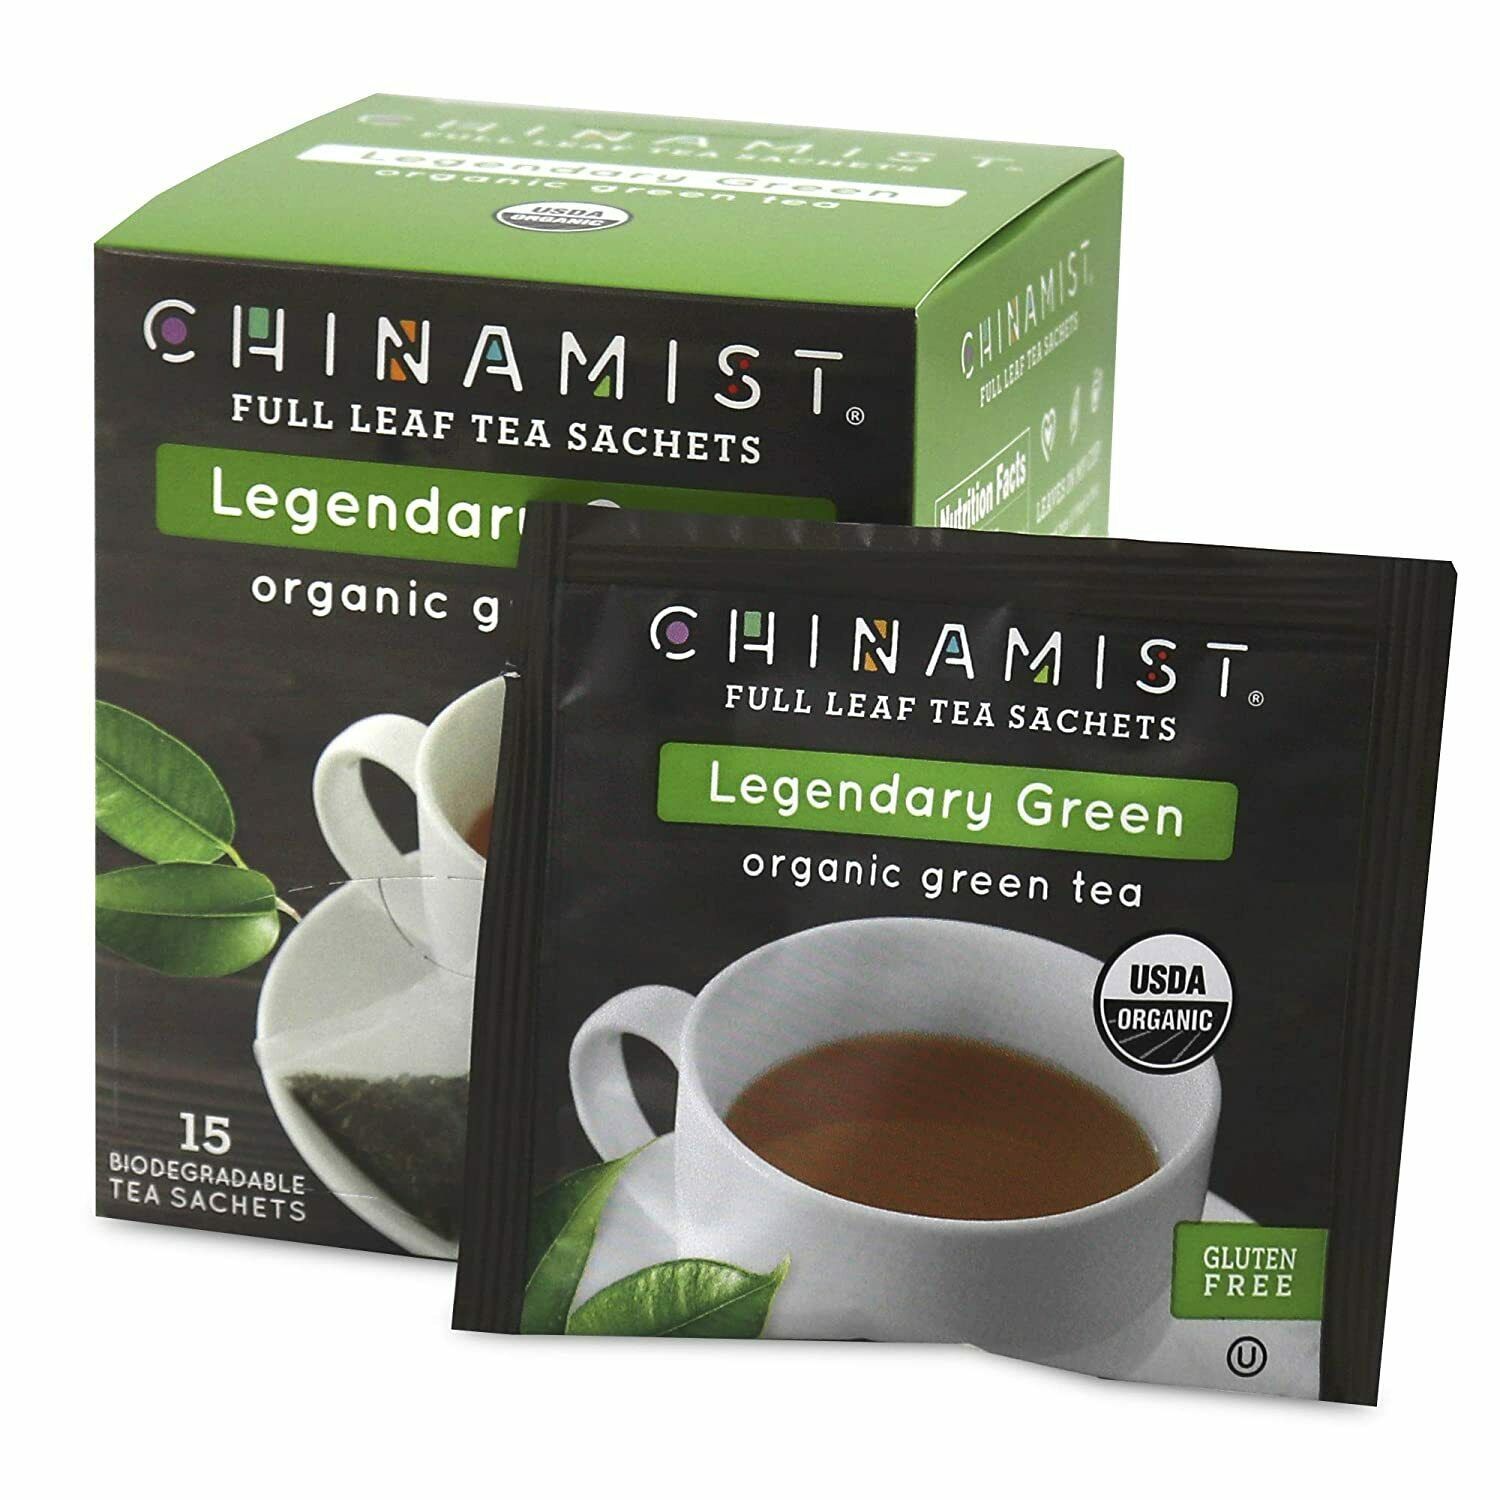 China Mist Legendary Green Organic Green Tea, 6/15 count boxes - $50.00